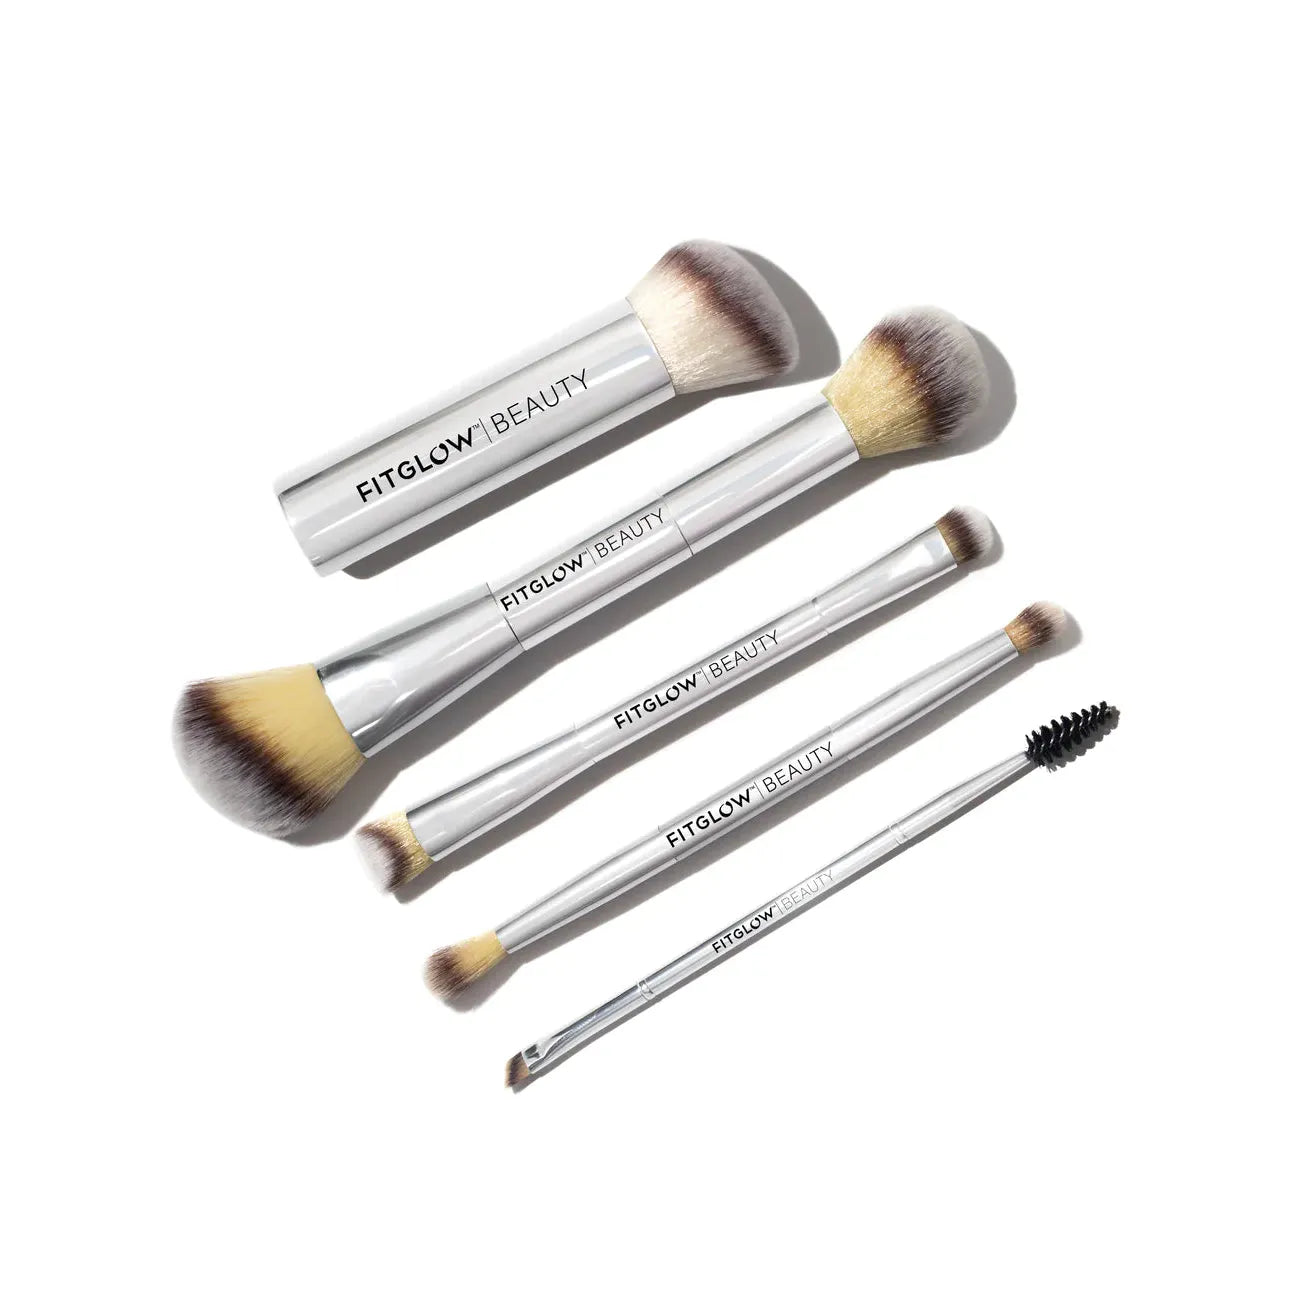 Fitglow Beauty Master Brush Set ($142 value)